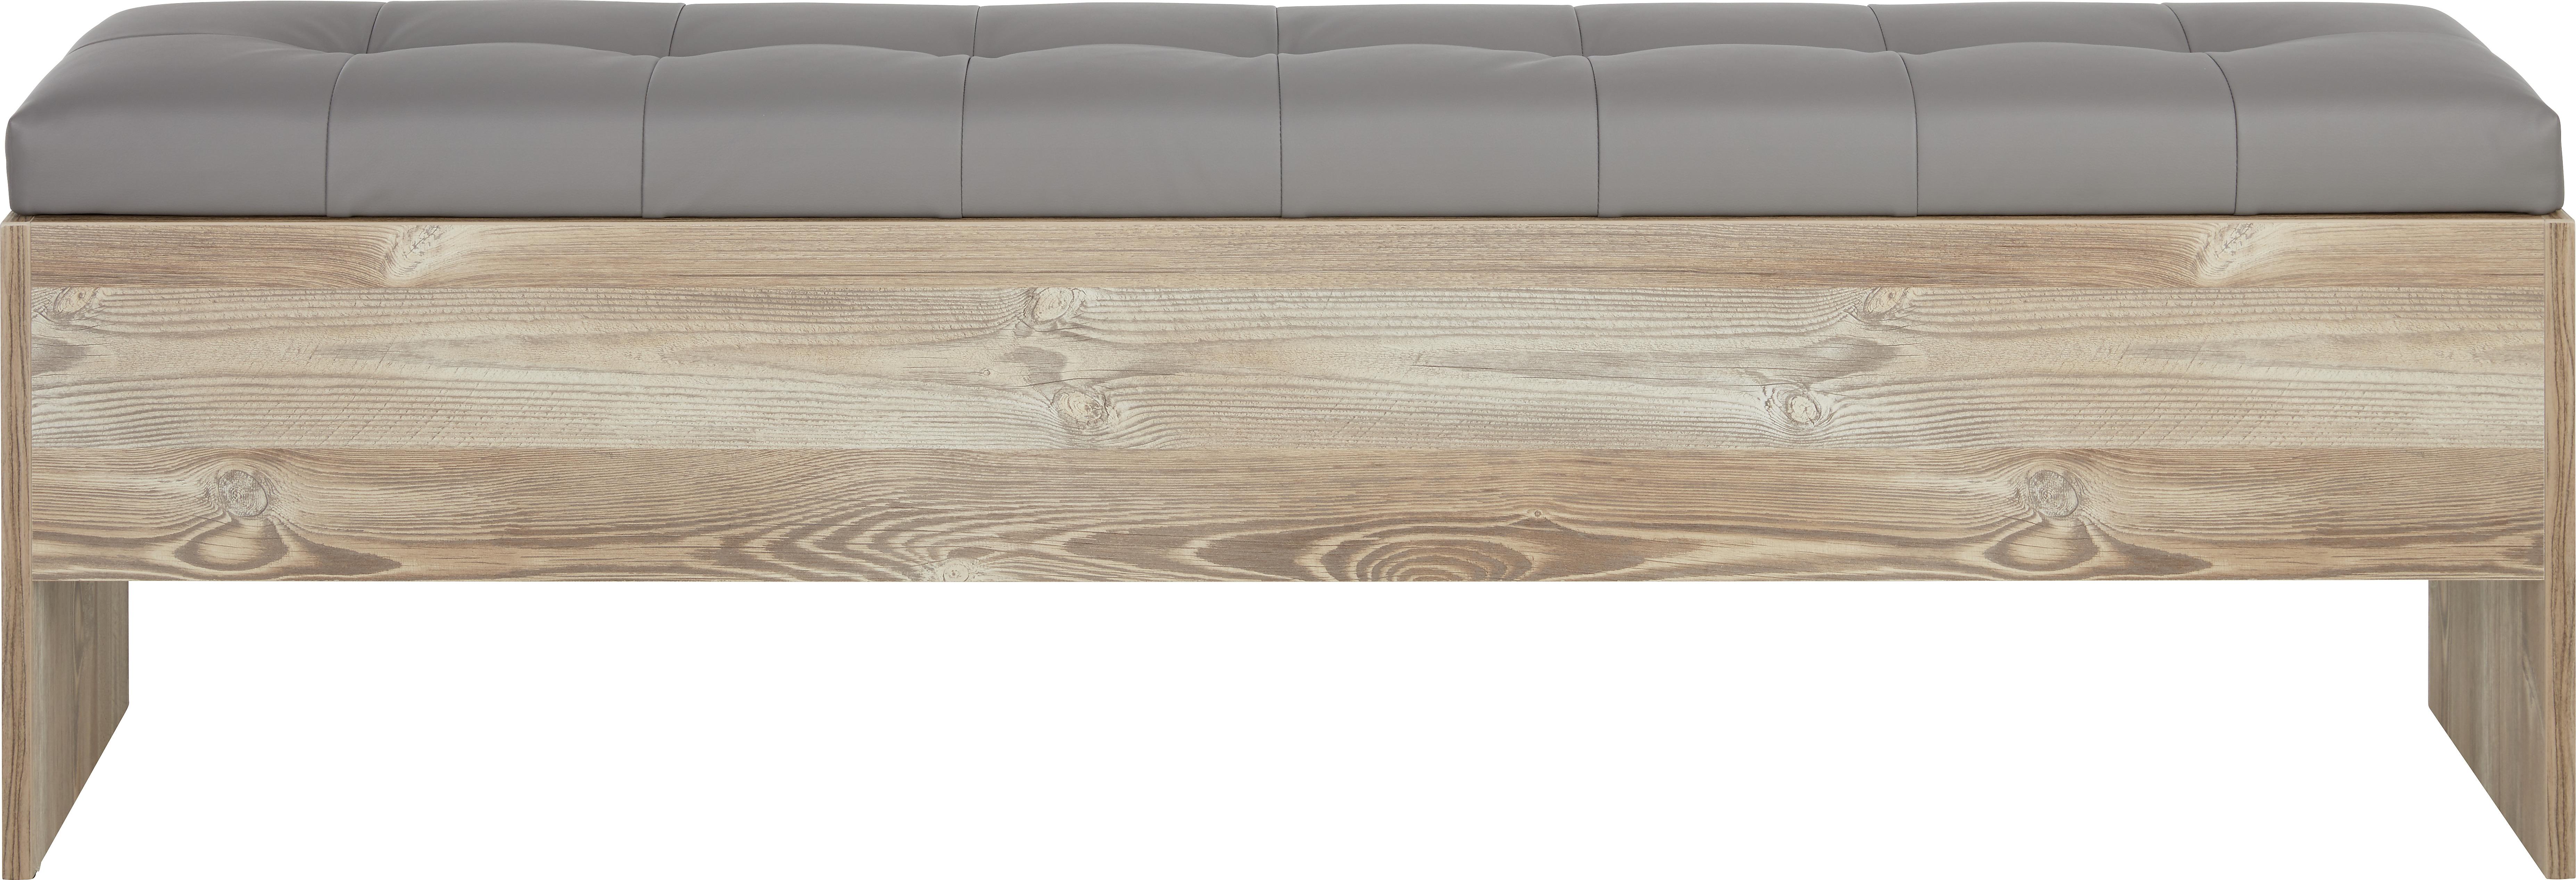 Škrinja-klupa Chanton - boje bora/tamno siva, Lifestyle, drvni materijal/metal (185/56/36,8cm) - Modern Living